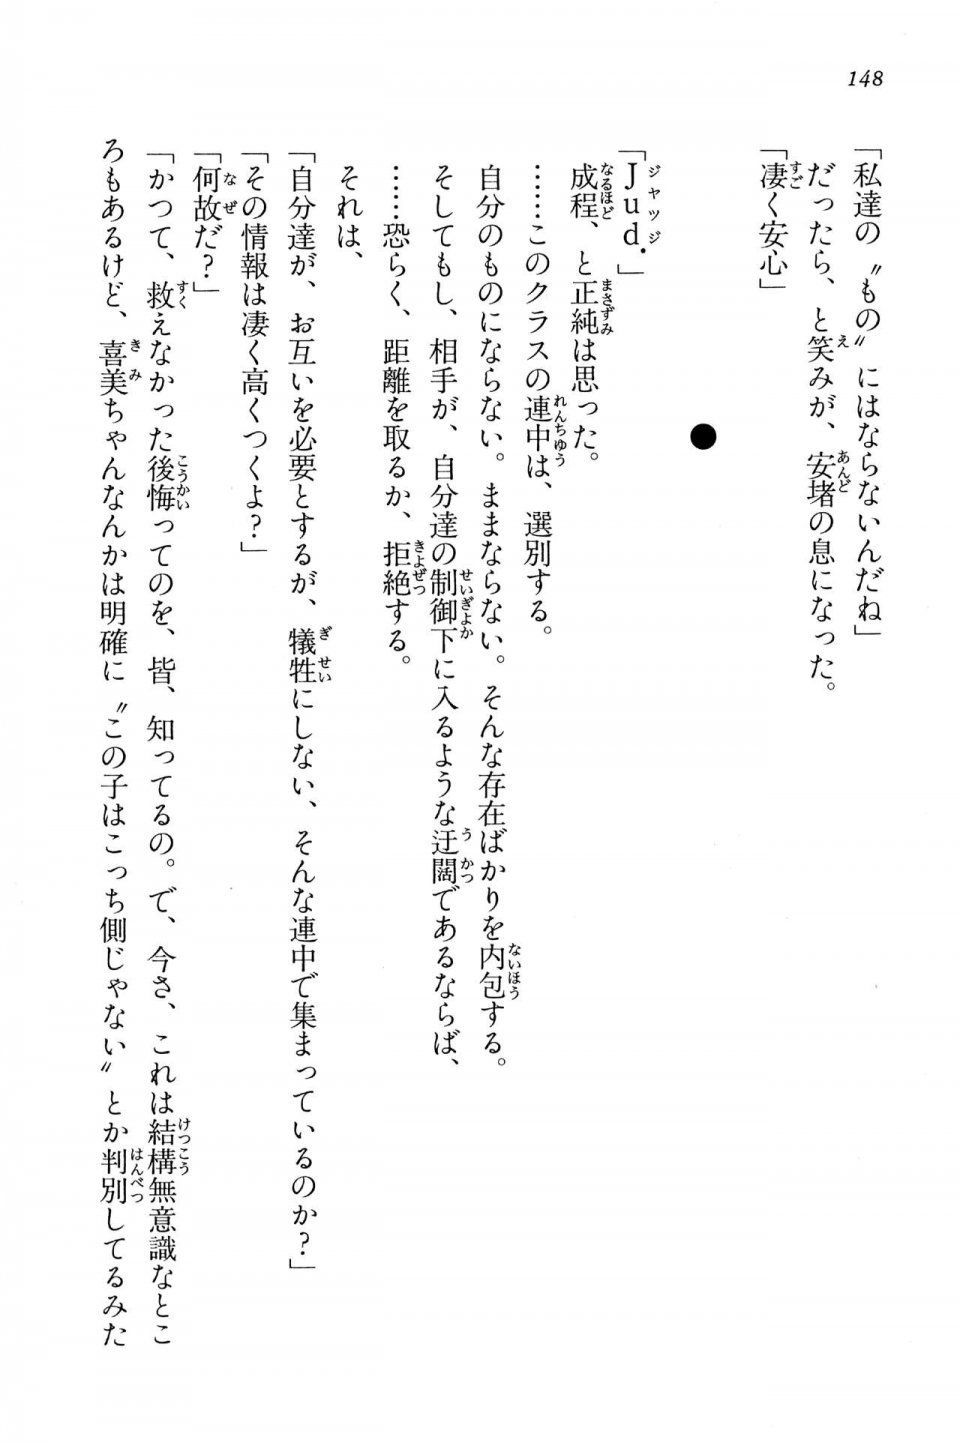 Kyoukai Senjou no Horizon BD Special Mininovel Vol 5(3A) - Photo #152